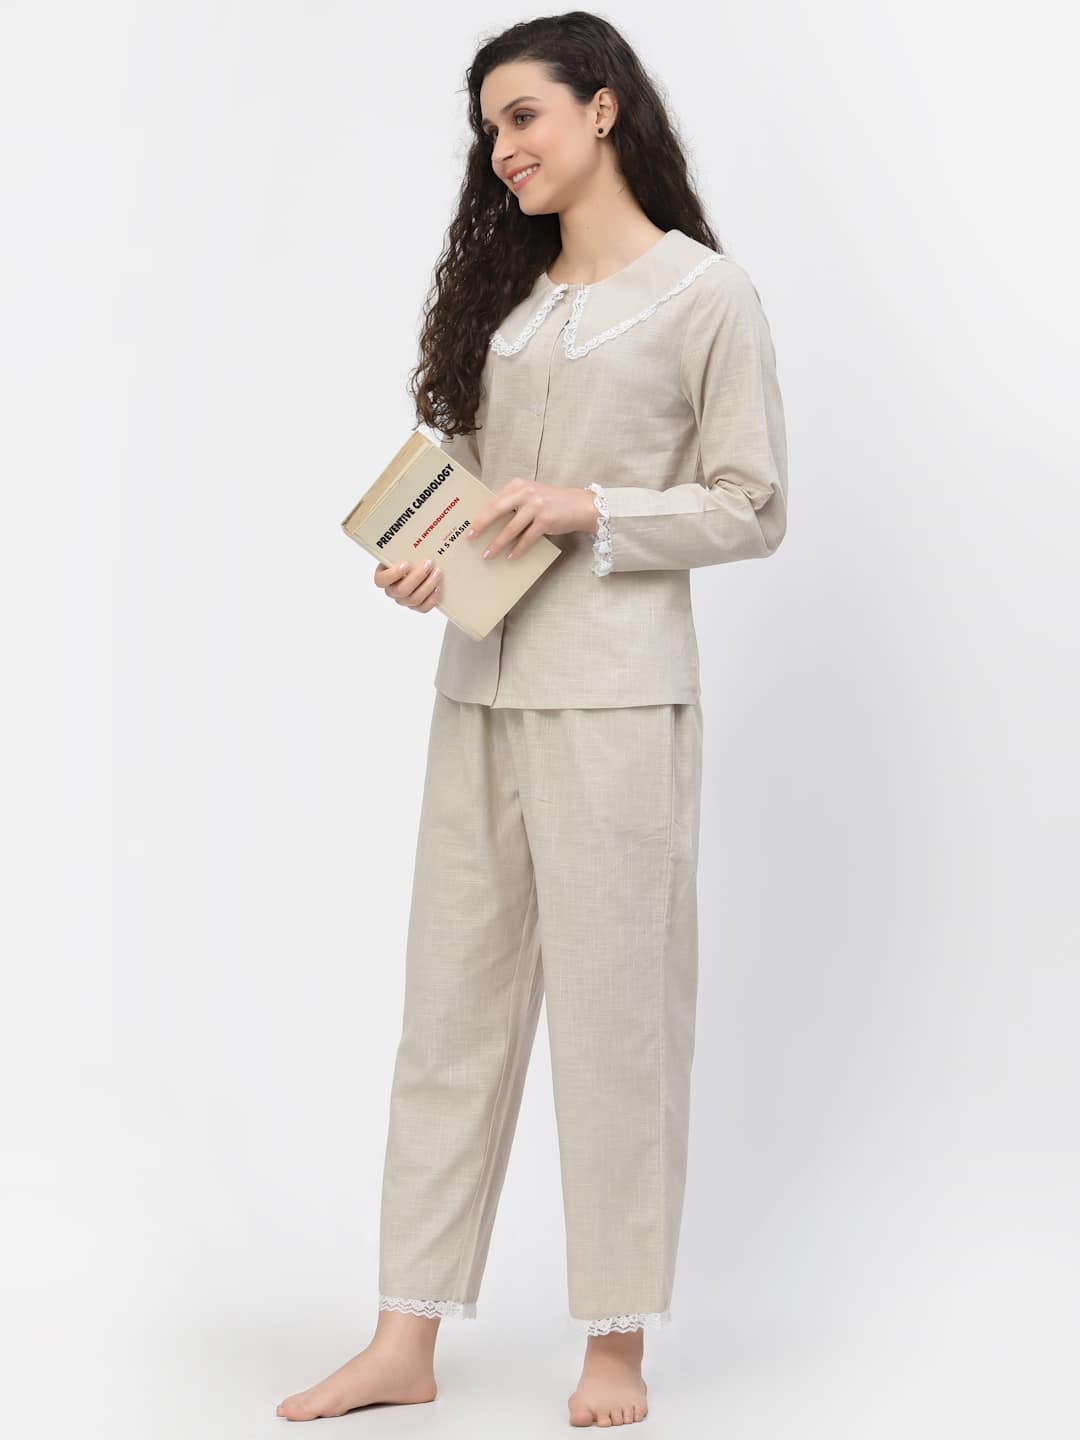 Lacy Cotton Beige Pretty Pyjama Night Suit